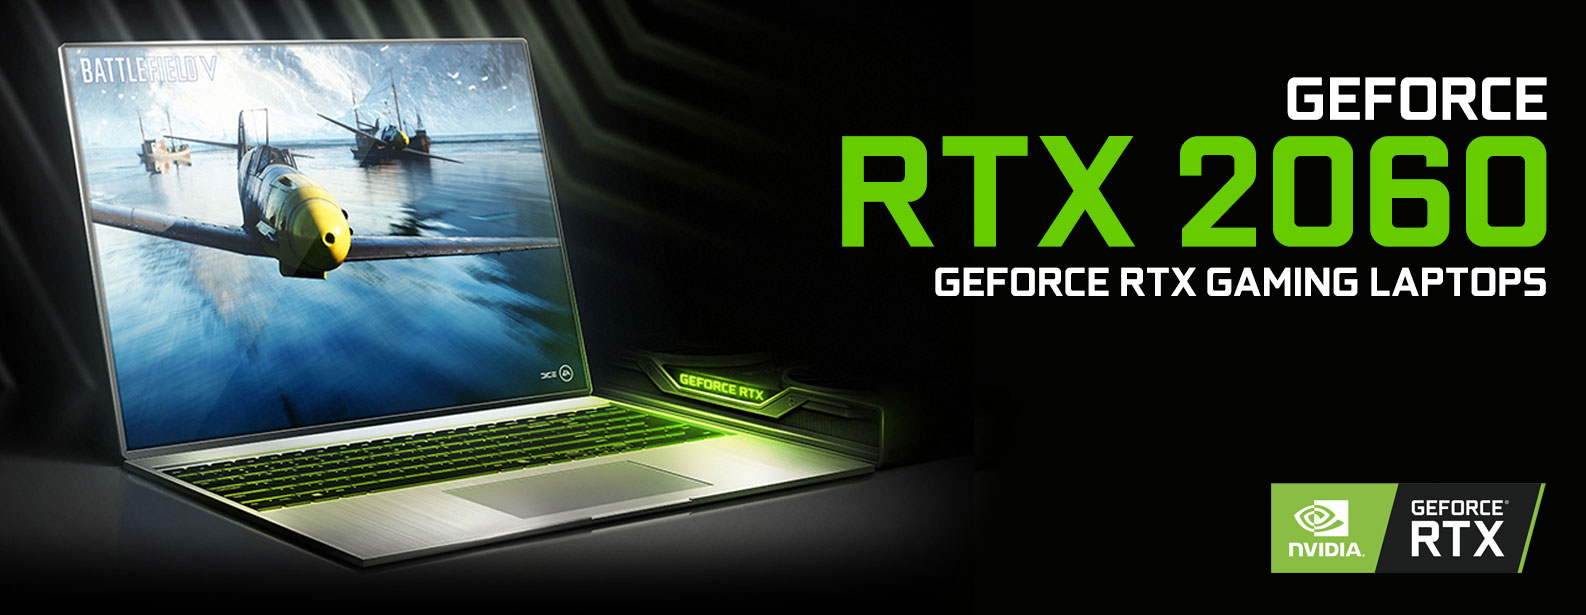 RTX 2060 Laptop Deals South Africa